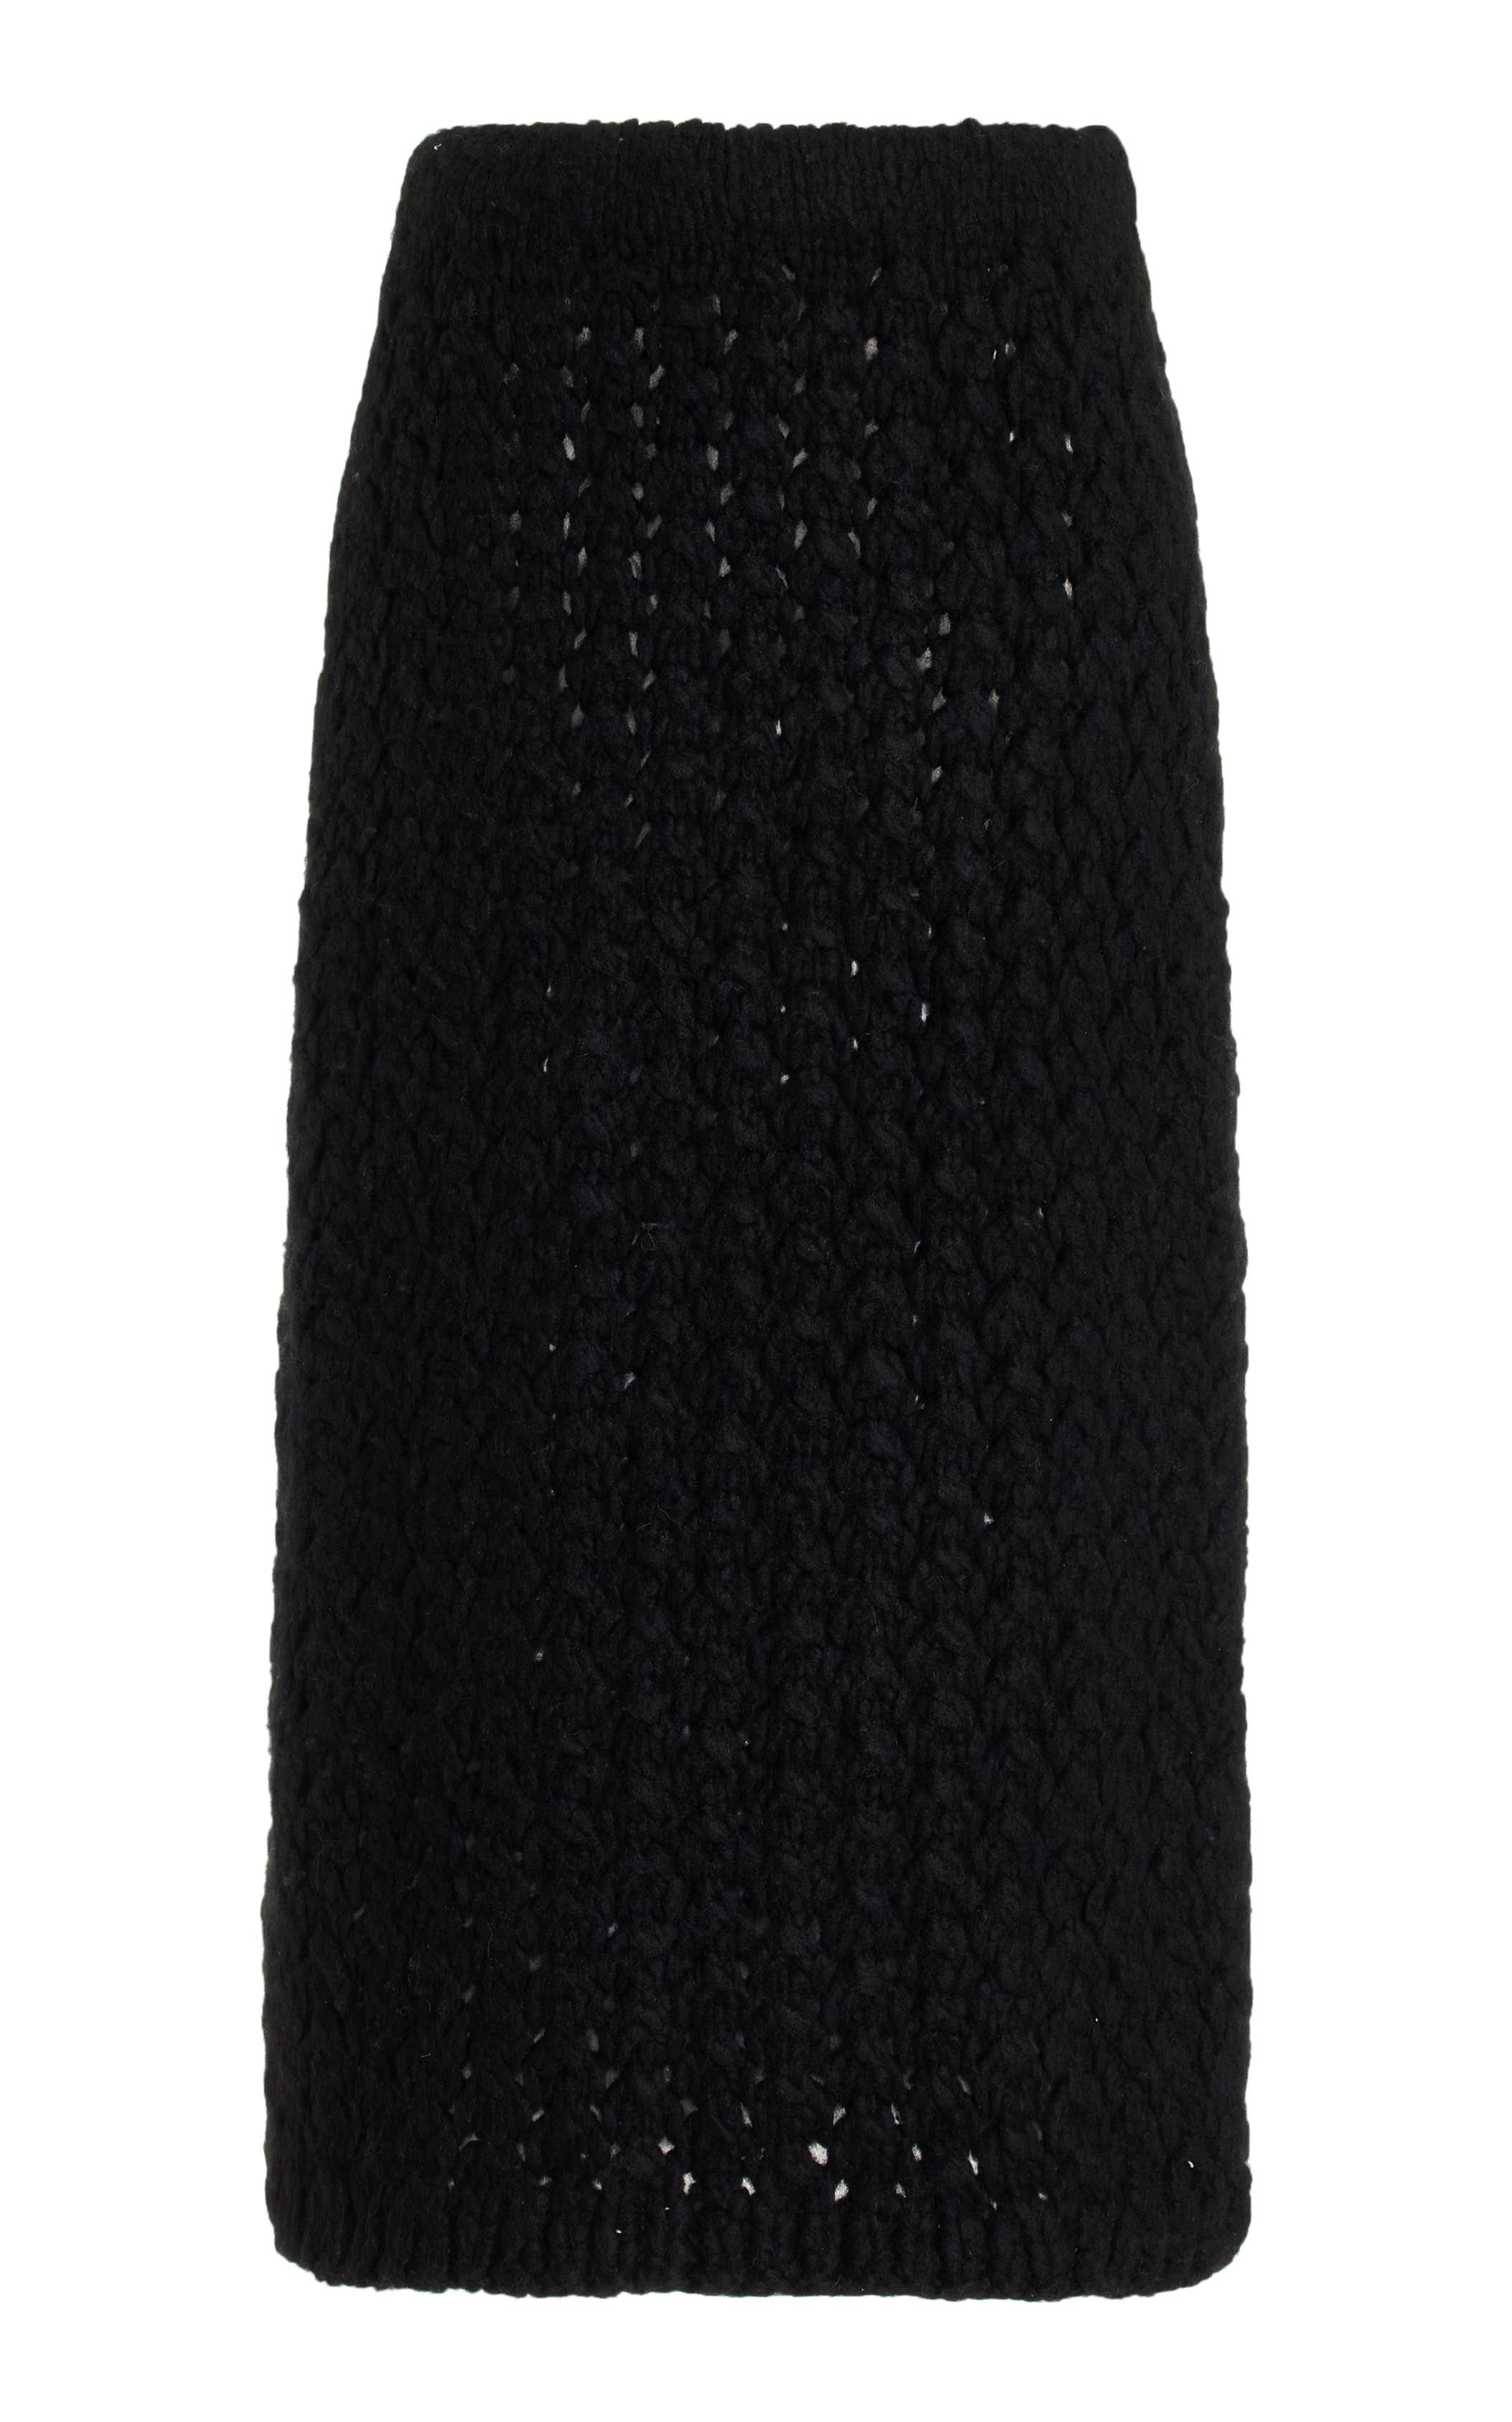 Collin Skirt in Black Welfat Cashmere - 1